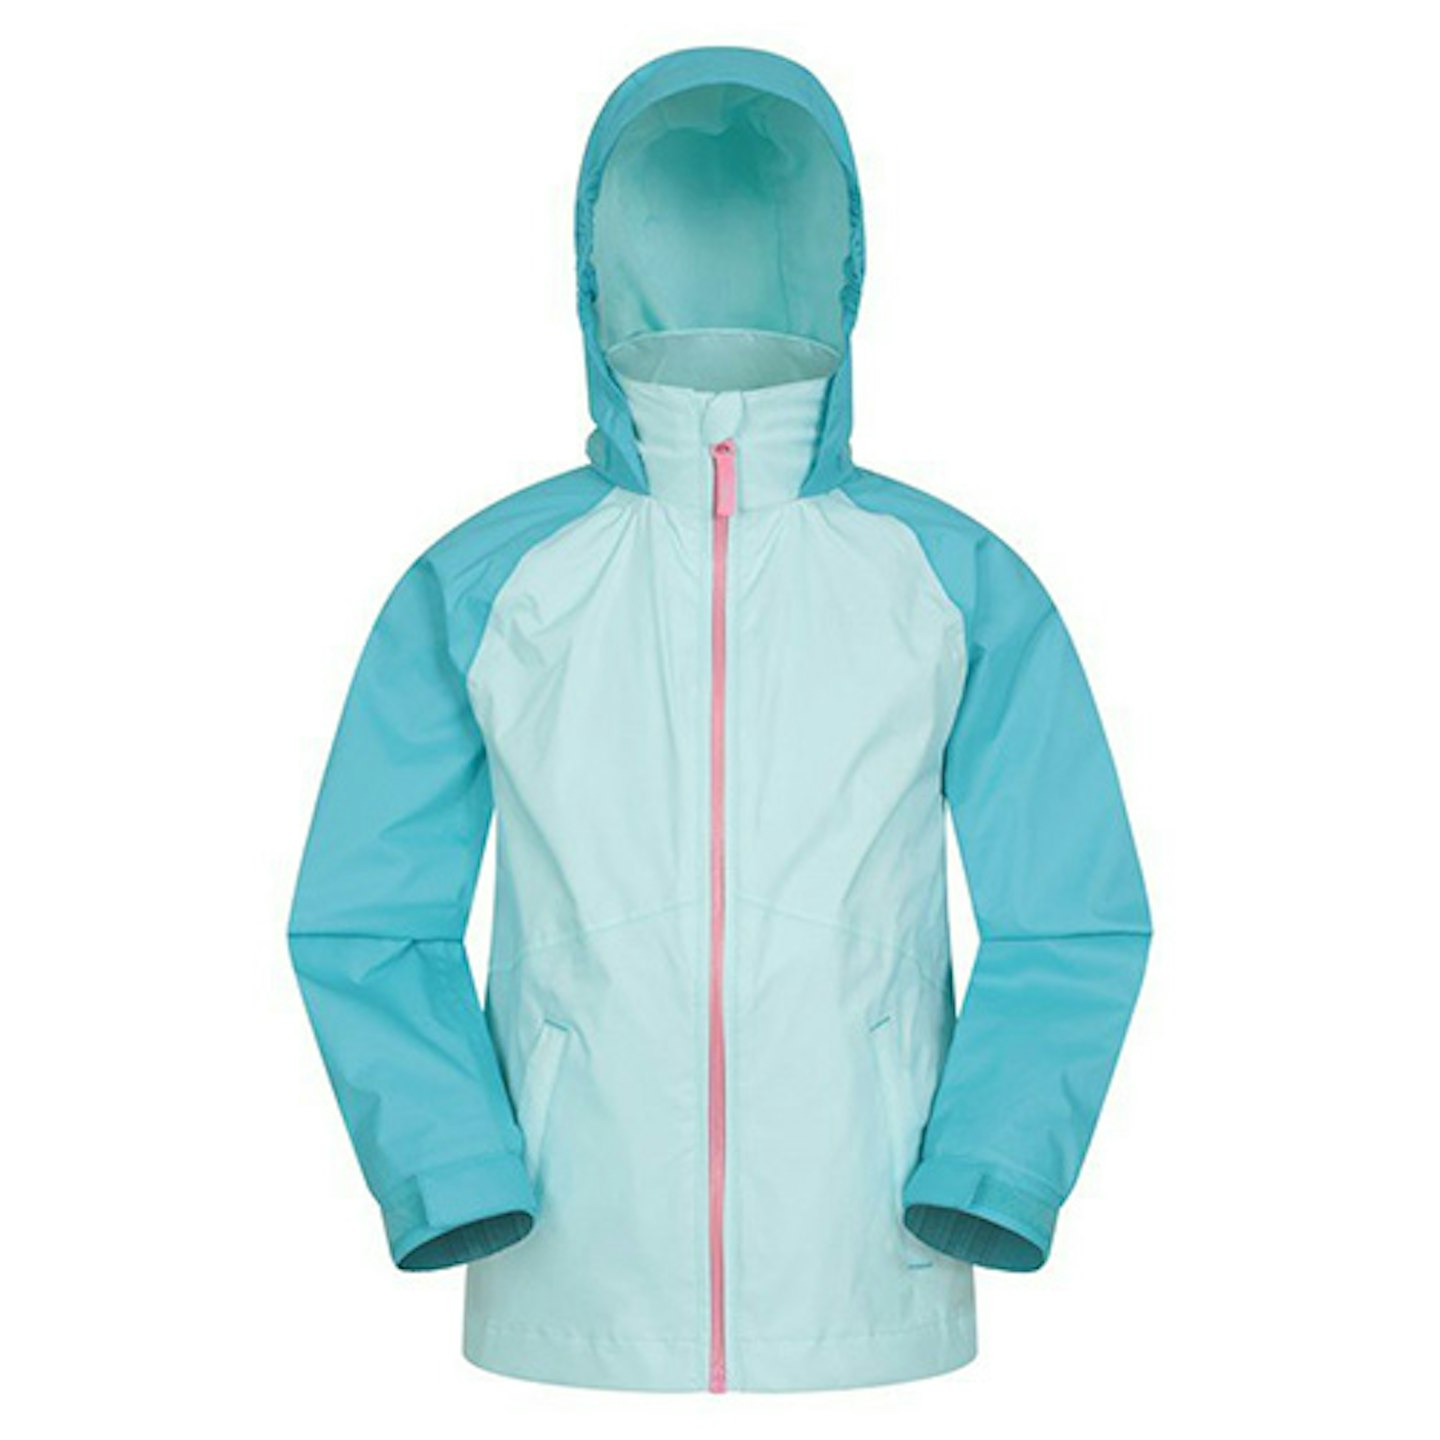 Aqua blue coloured kids raincoat with hood and pink zip